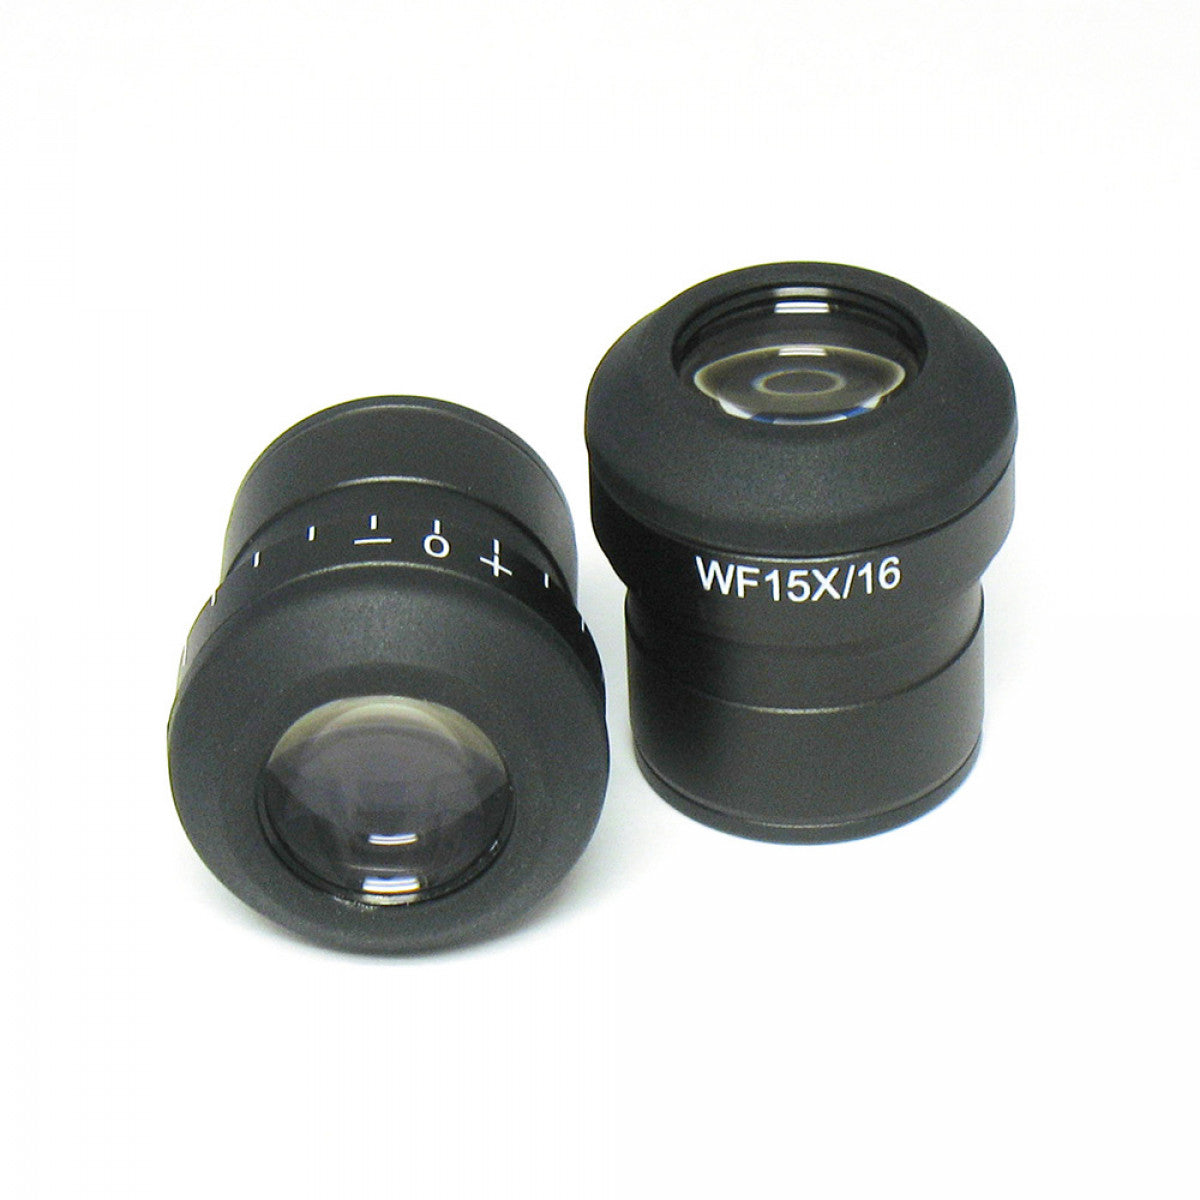 Eyepieces for Unitron Z850 Microscope Series